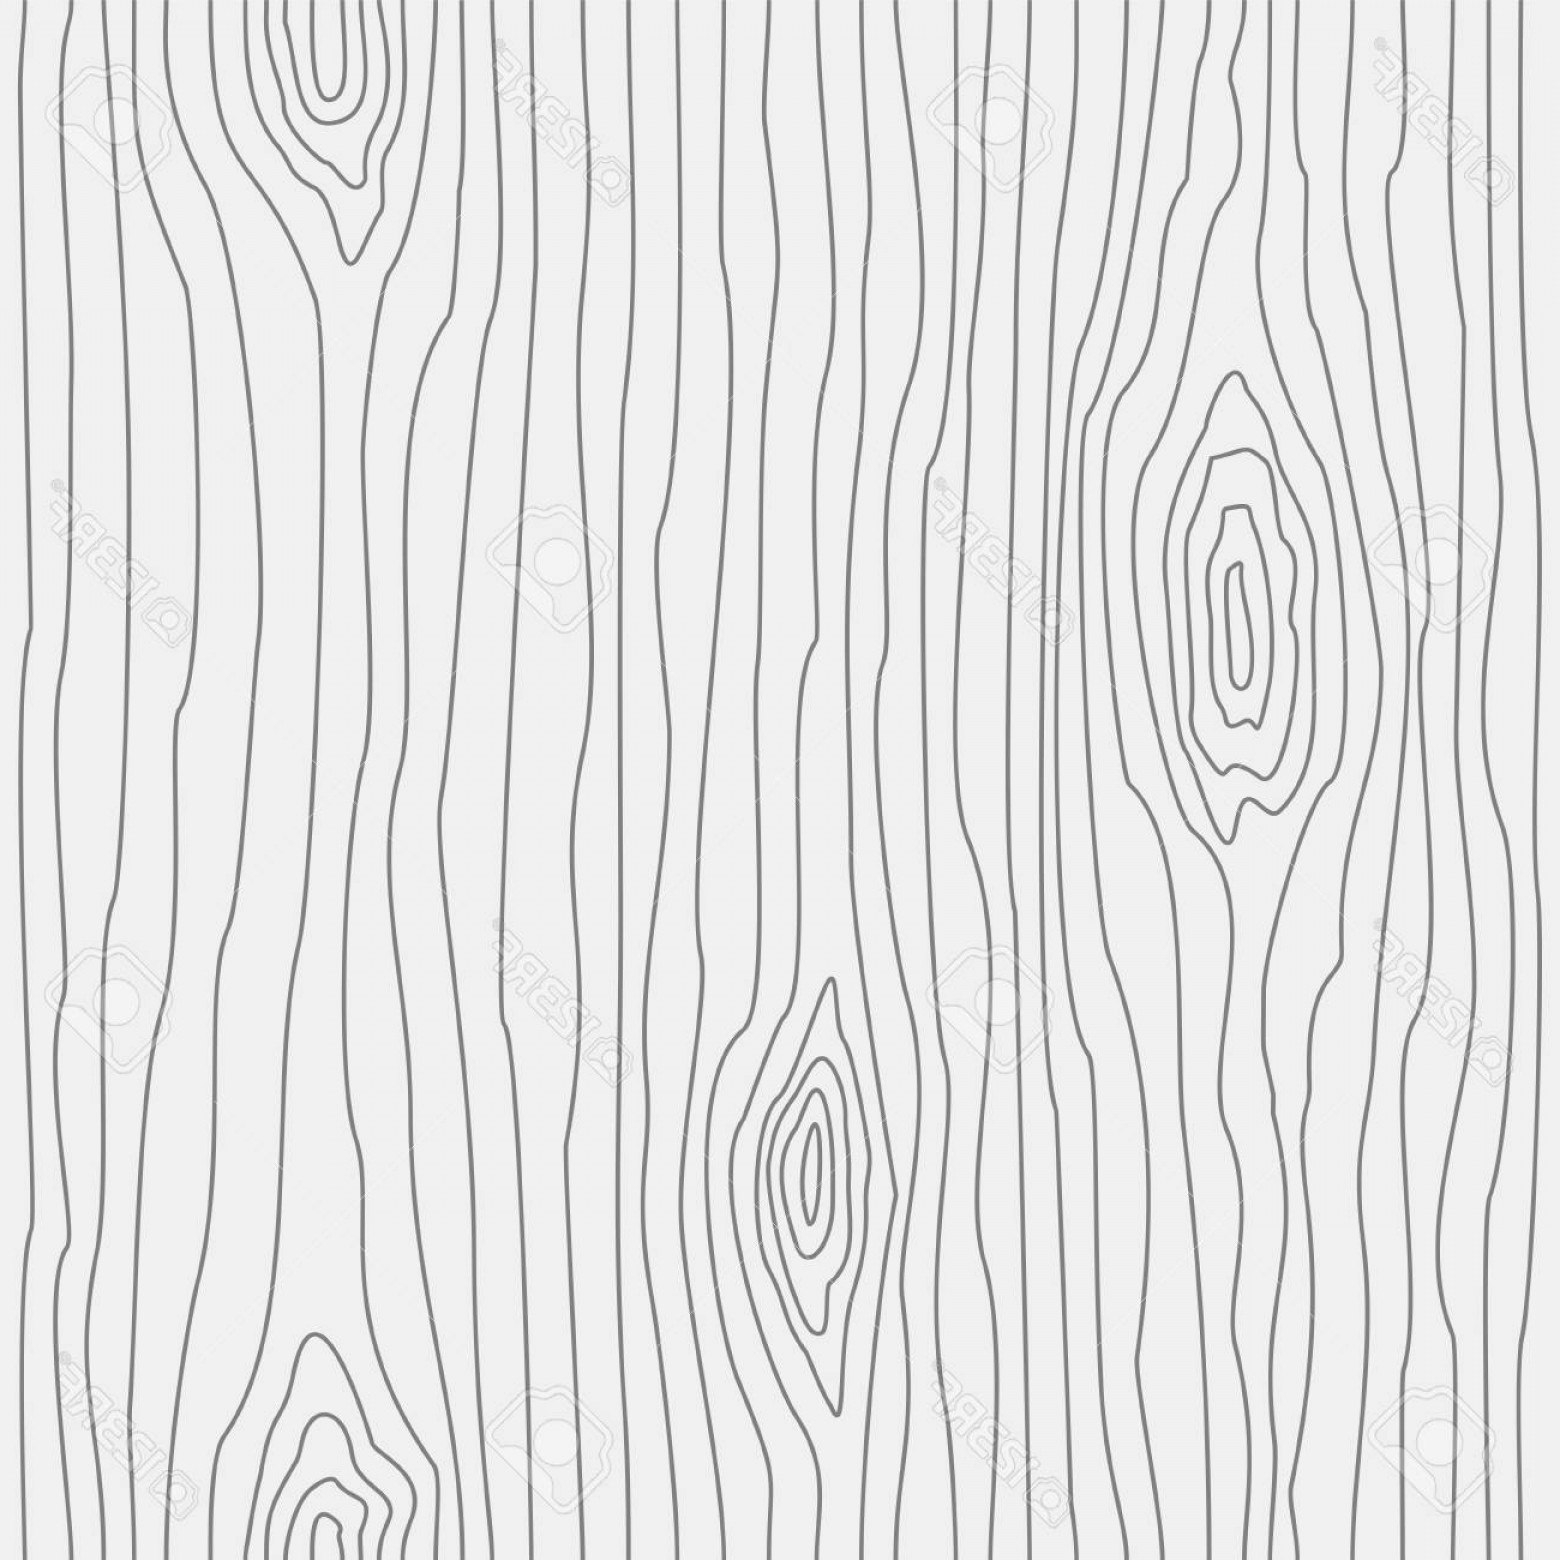 wood-grain-texture-vector-at-vectorified-collection-of-wood-grain-texture-vector-free-for